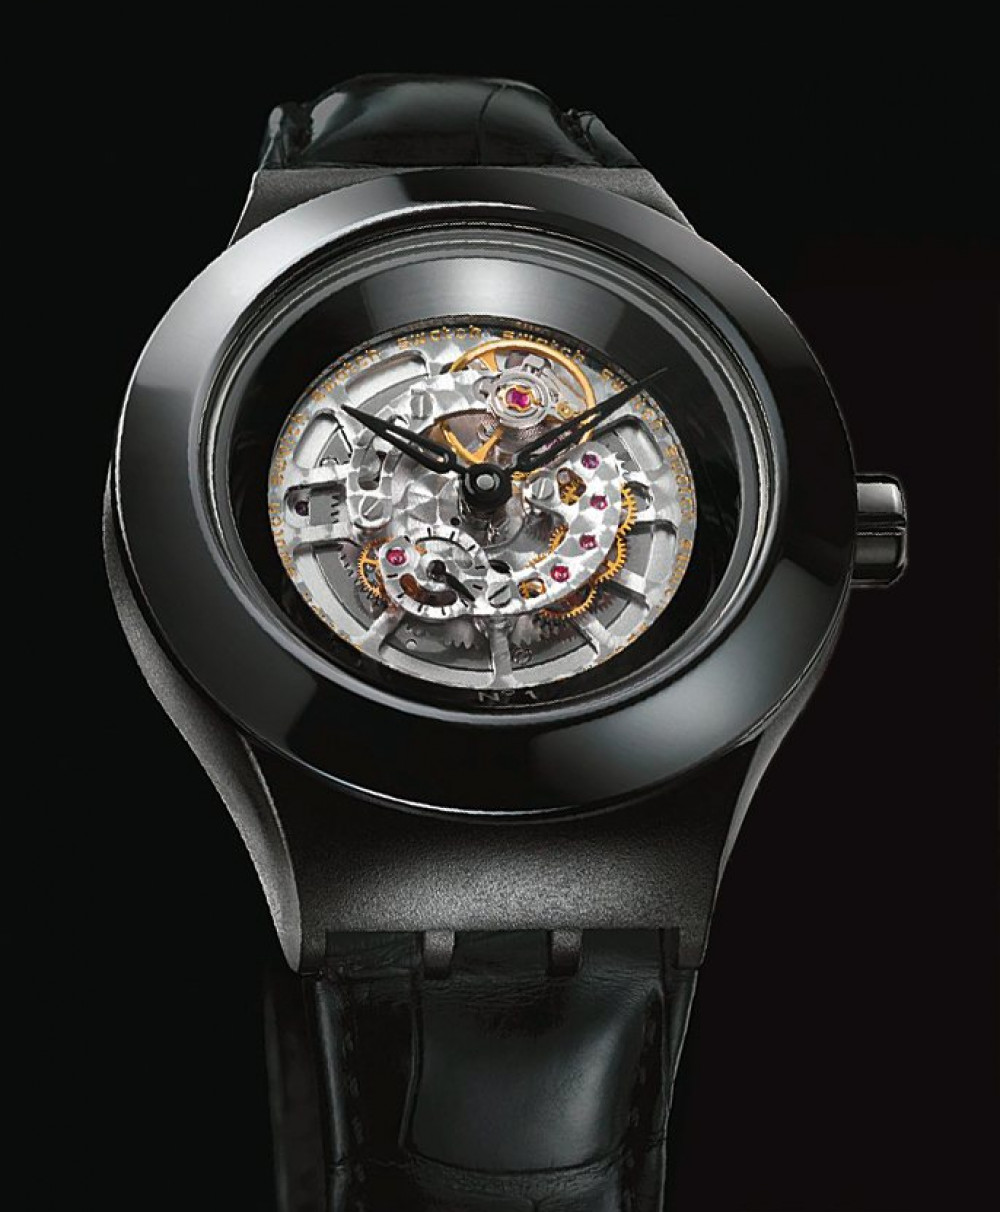 Zegarek firmy Swatch, model Diaphane One